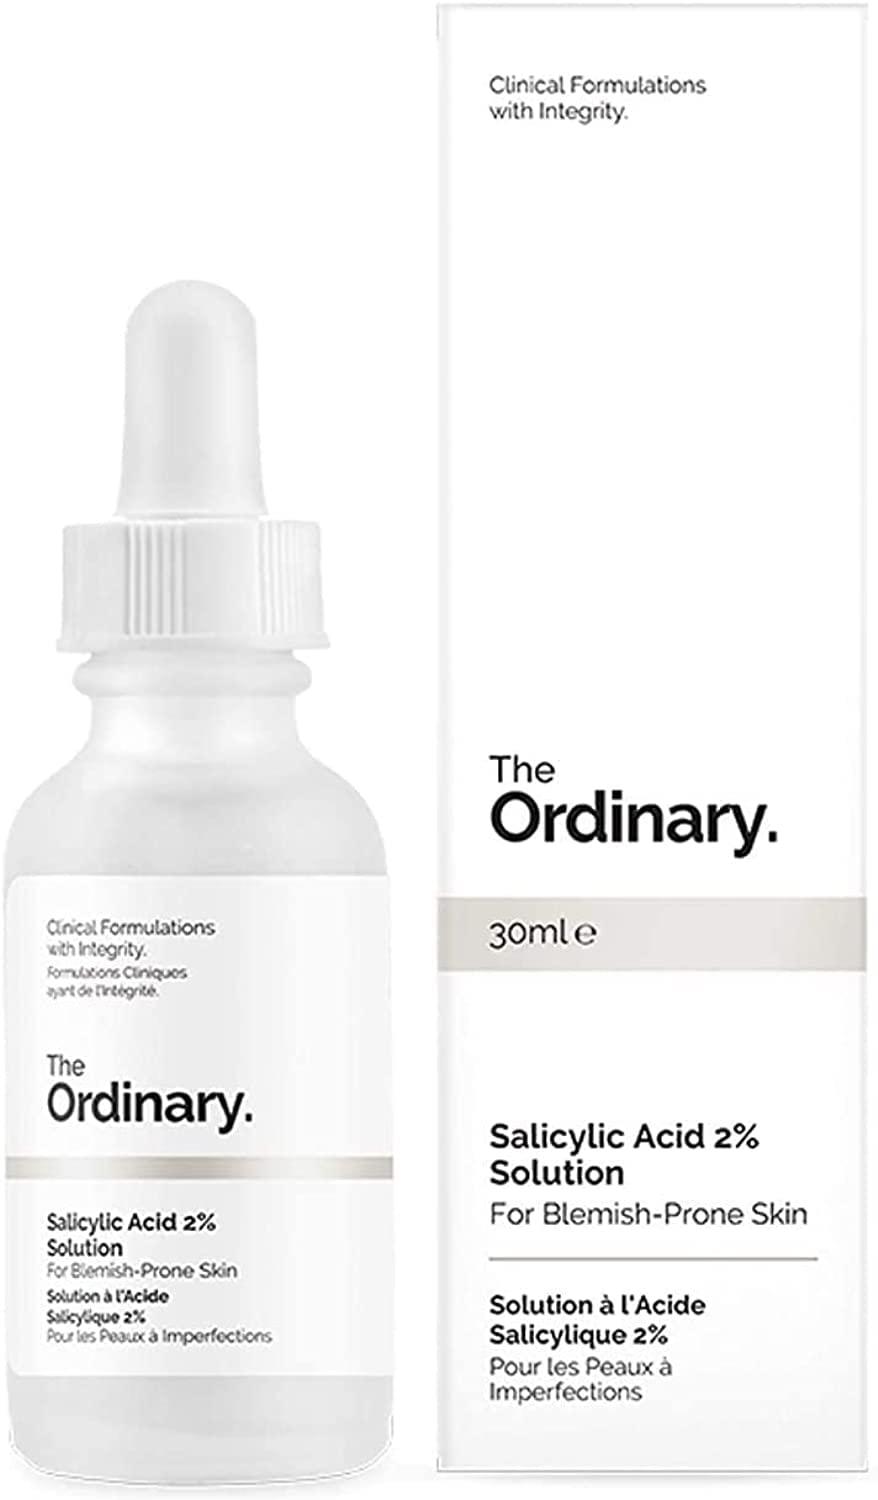 The Ordinary Exfoliating Salicylic acid